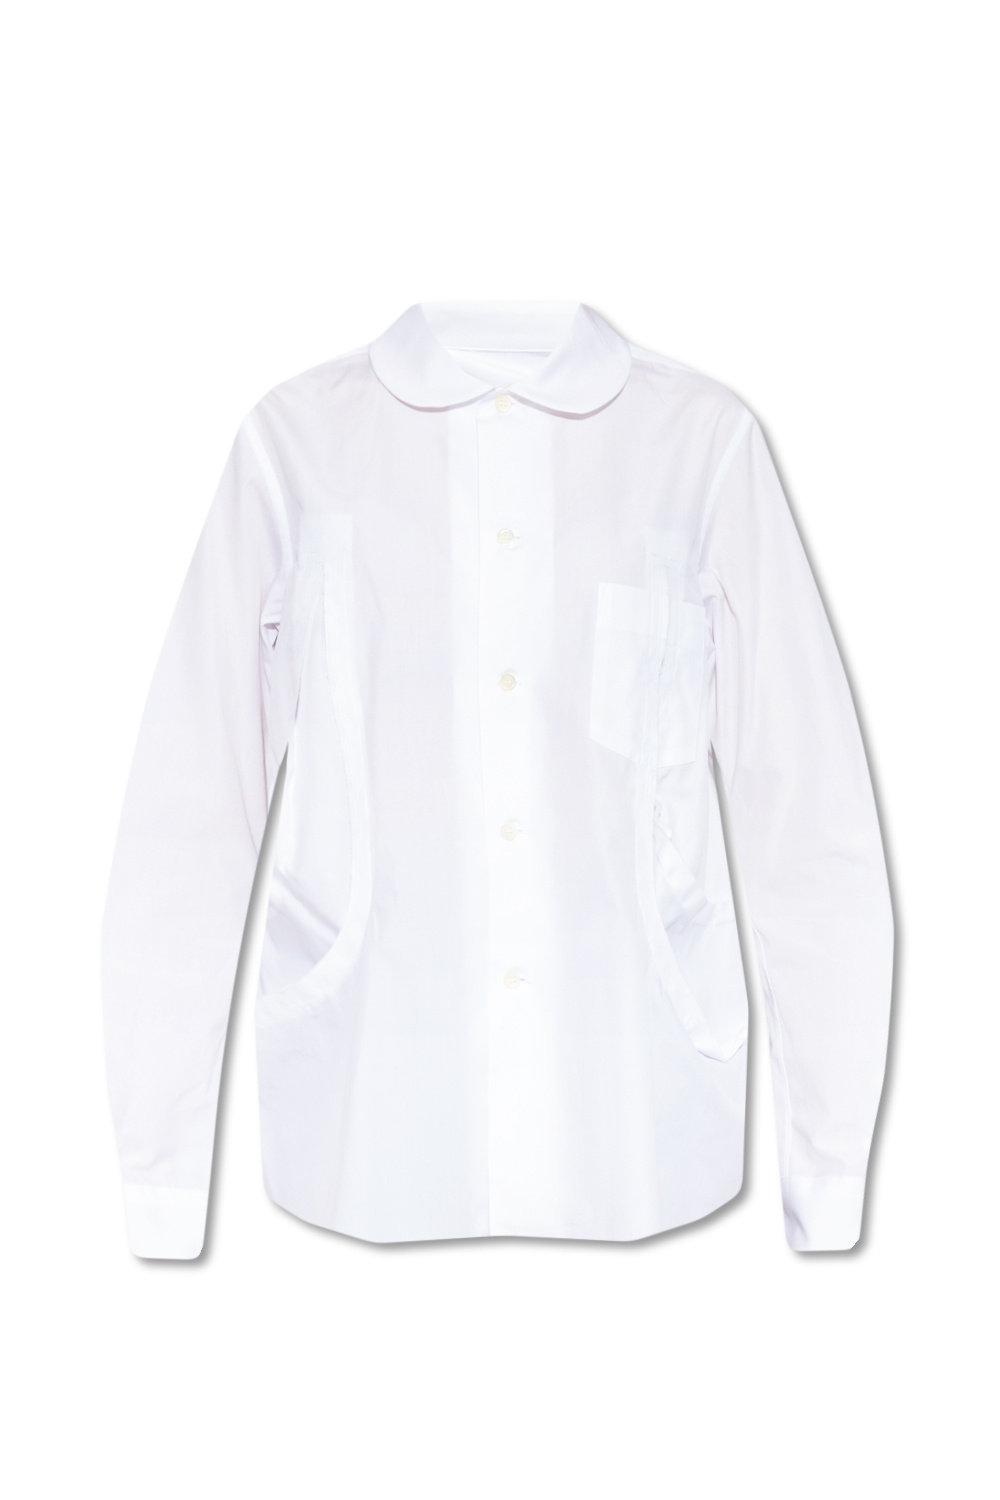 CDG by Comme des Garçons beyondher brandy t adidas shirt bodysuit in white